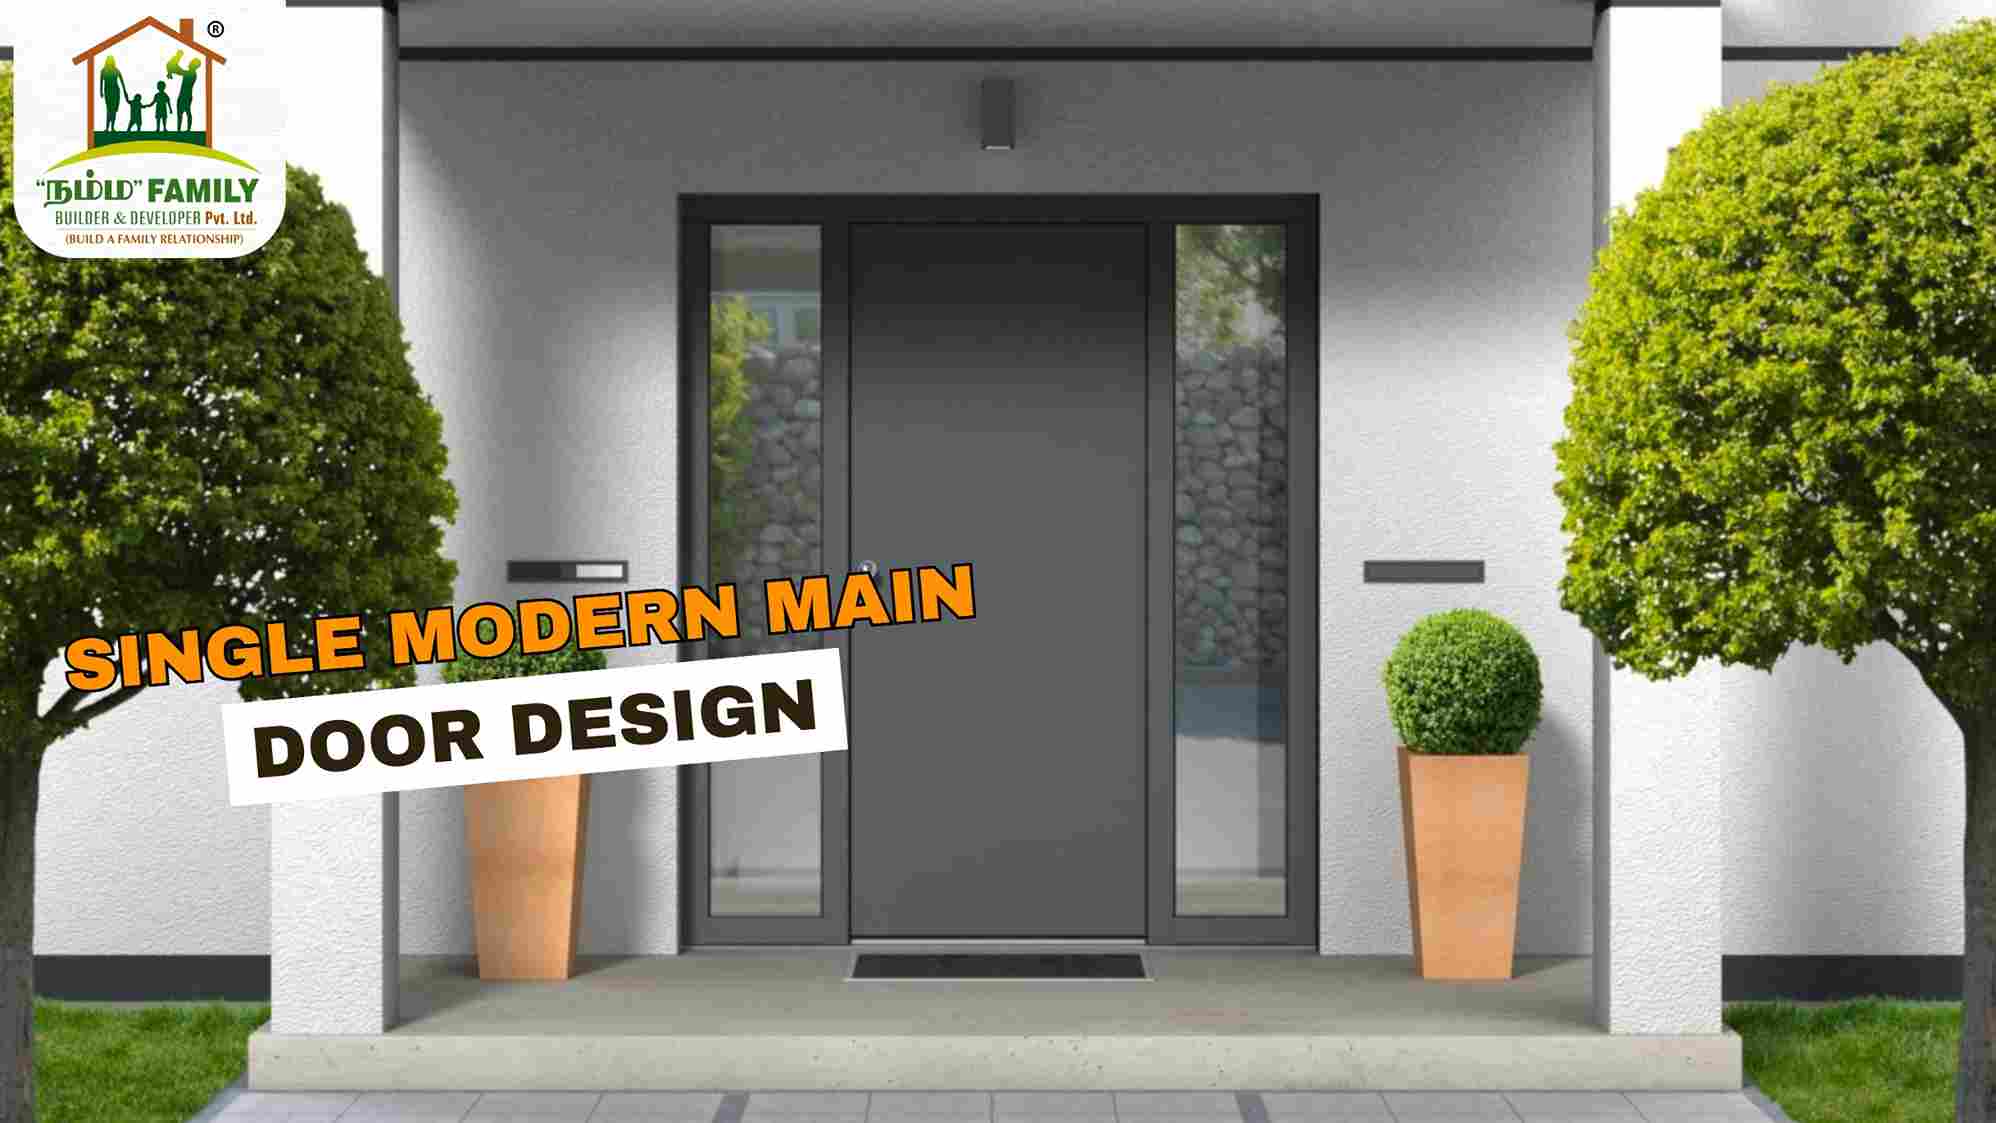 Single Modern Main Door Design - Namma Family Builder